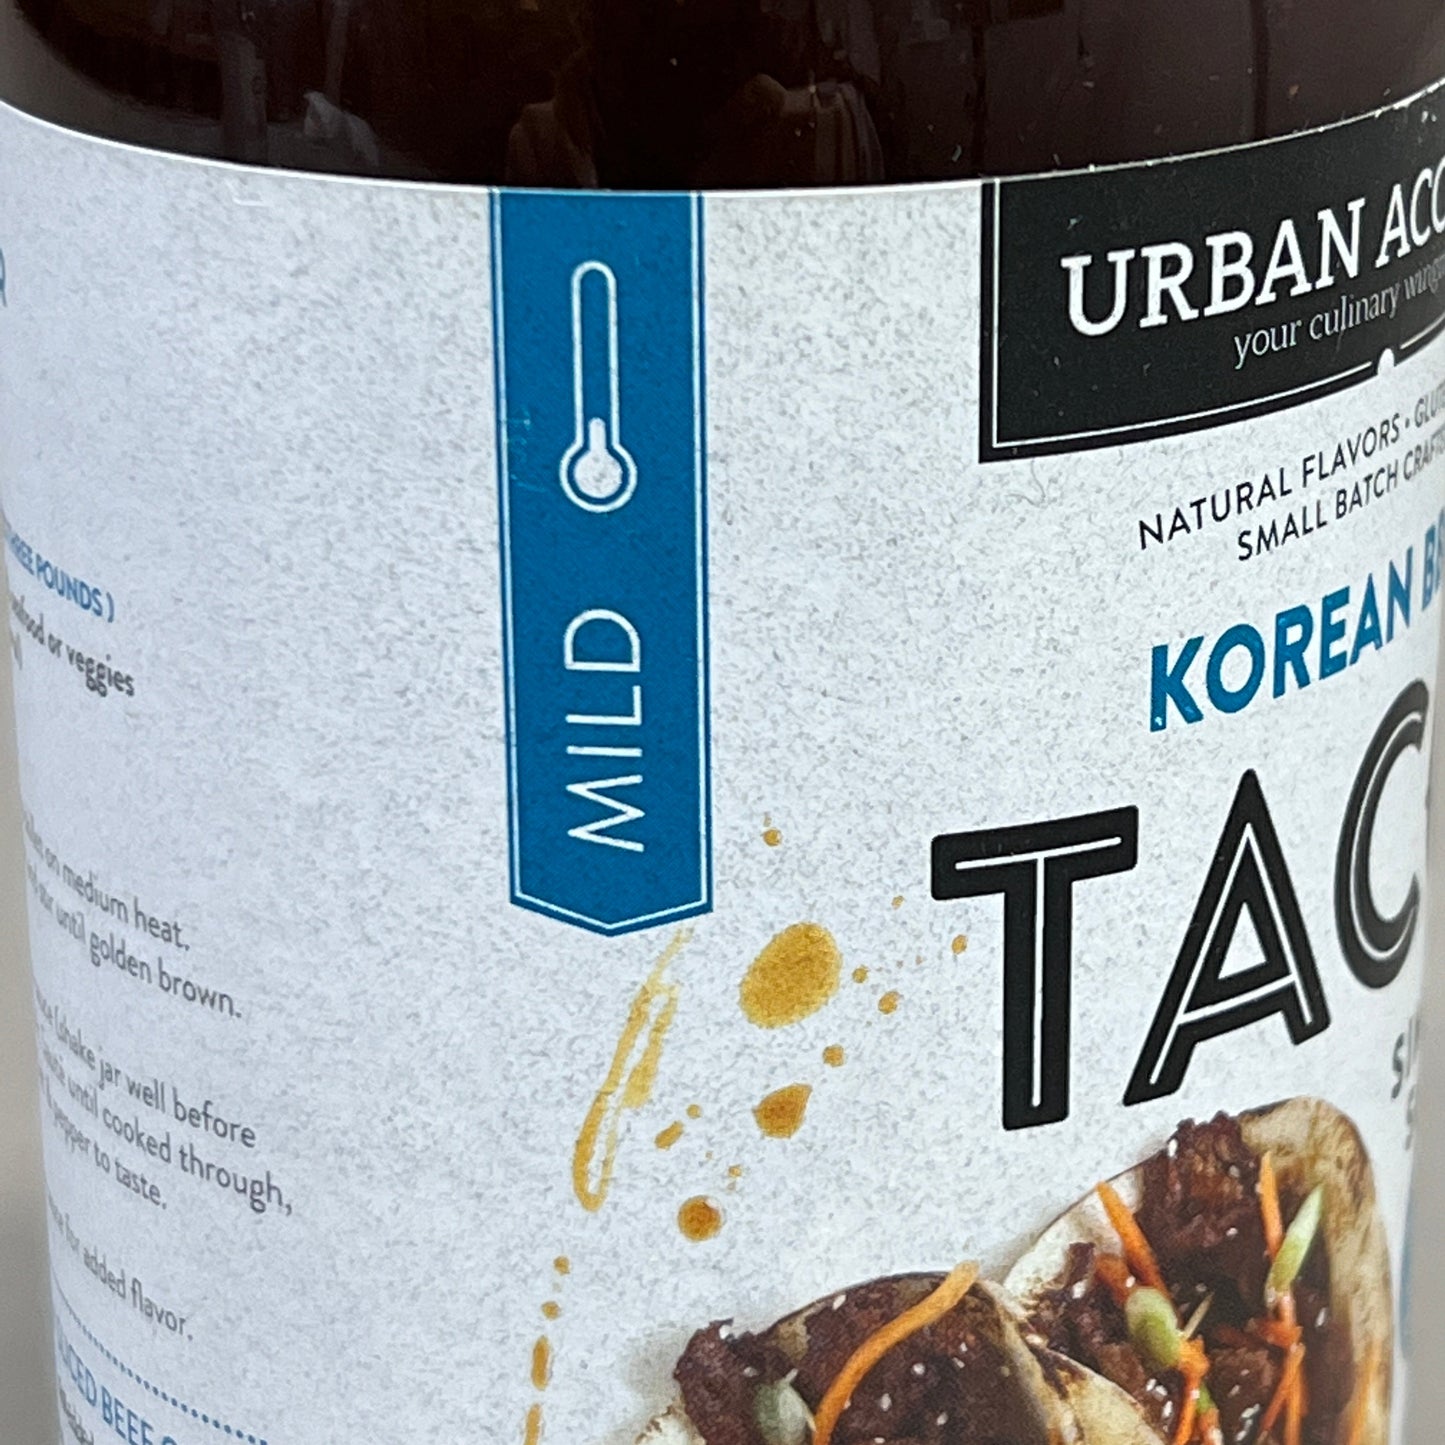 URBAN ACCENTS 4-PACK Mild Korean Barbecue Taco Simmer Sauce 14.3 oz GF 02/24 QURA4E31 (New)